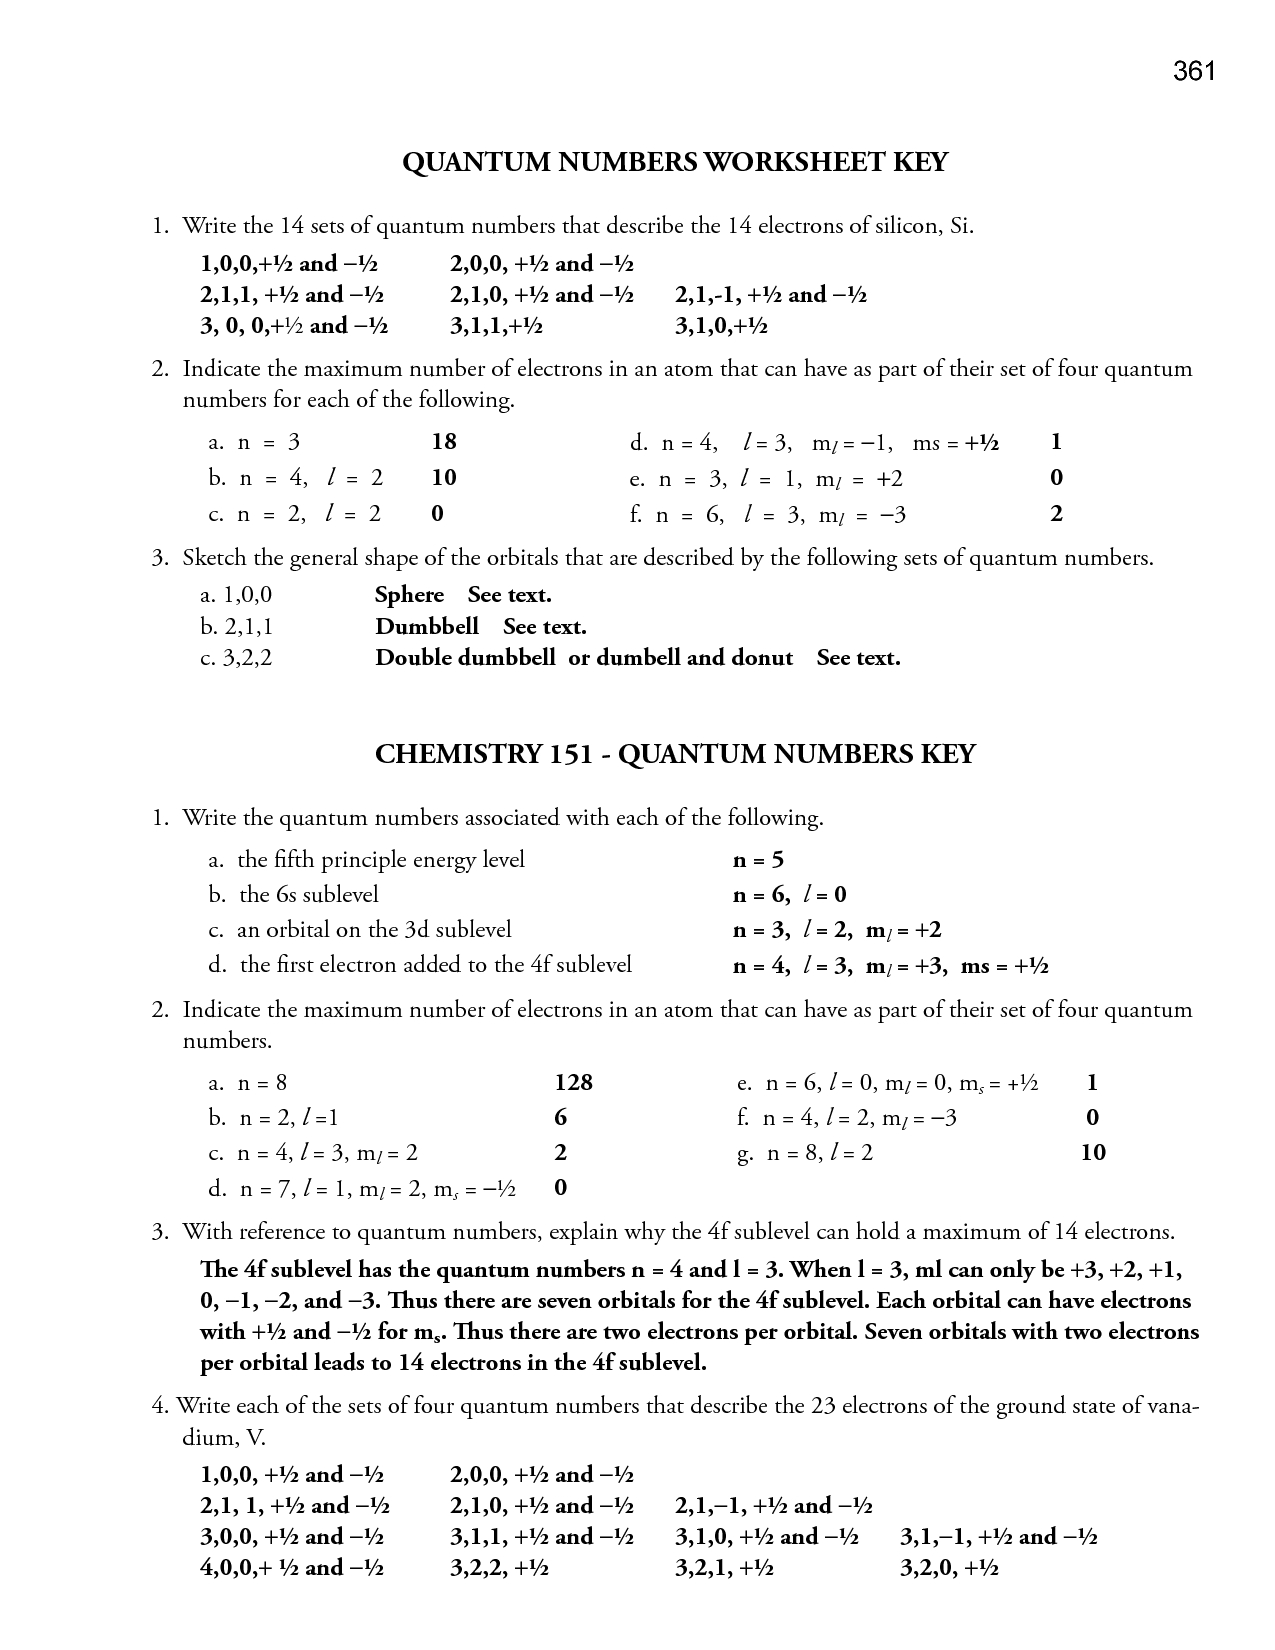 Quantum Numbers Worksheet Answers  Fatmatoru